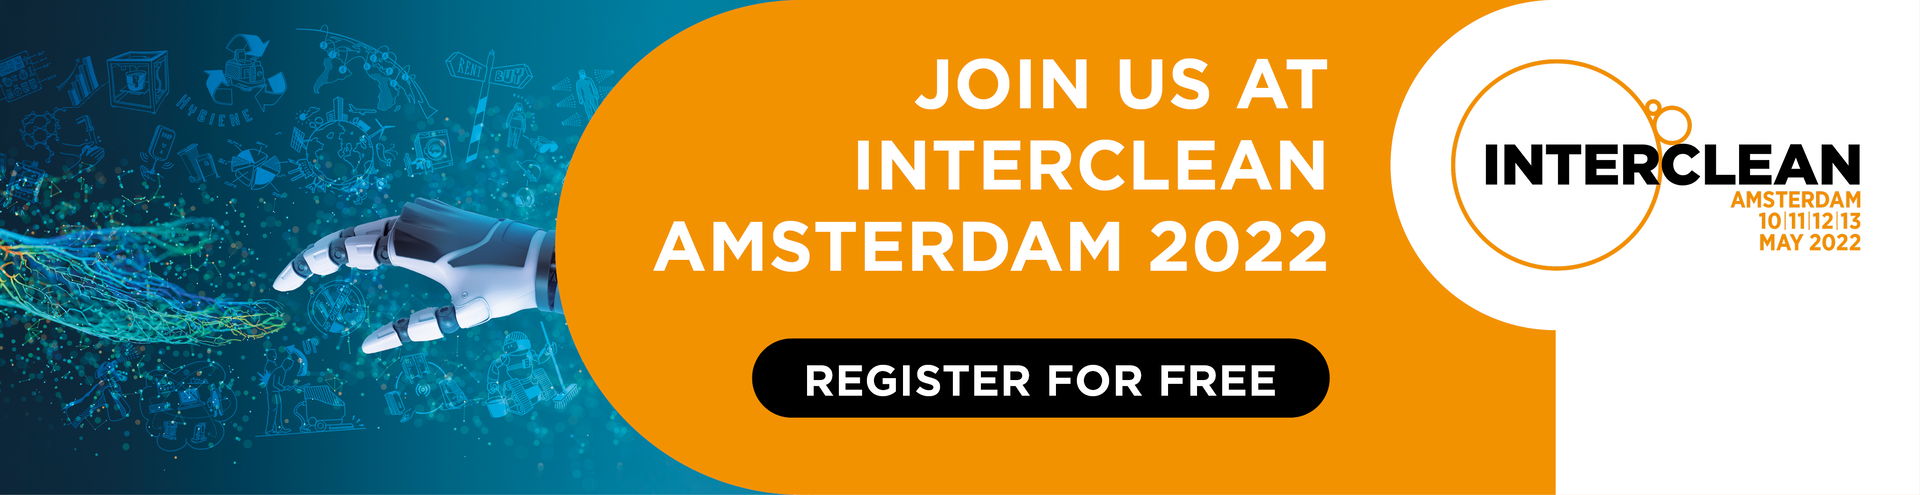 Interclean Registration Interclean Amsterdam - Dreumex